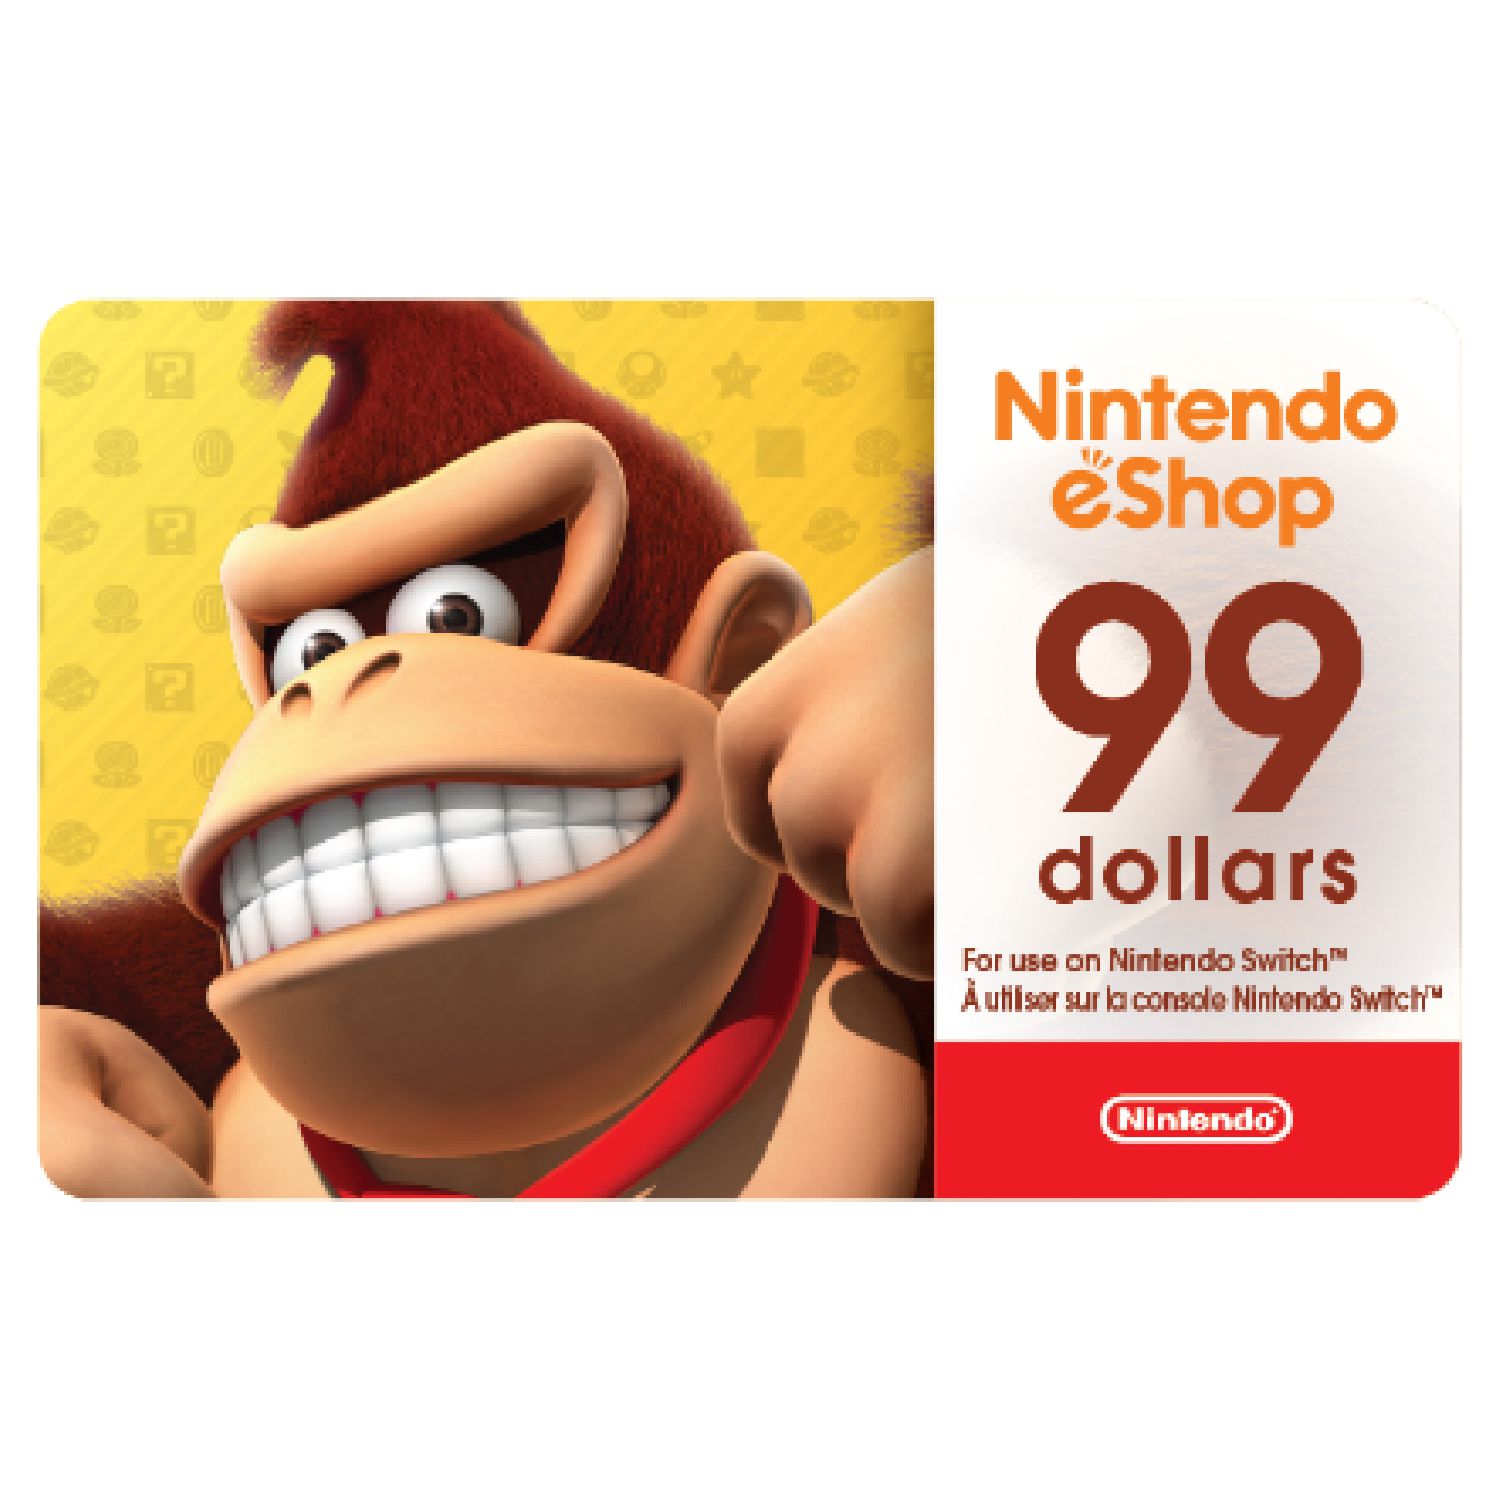 Nintendo eShop $20 Carte-Cadeau (Code Numérique) 